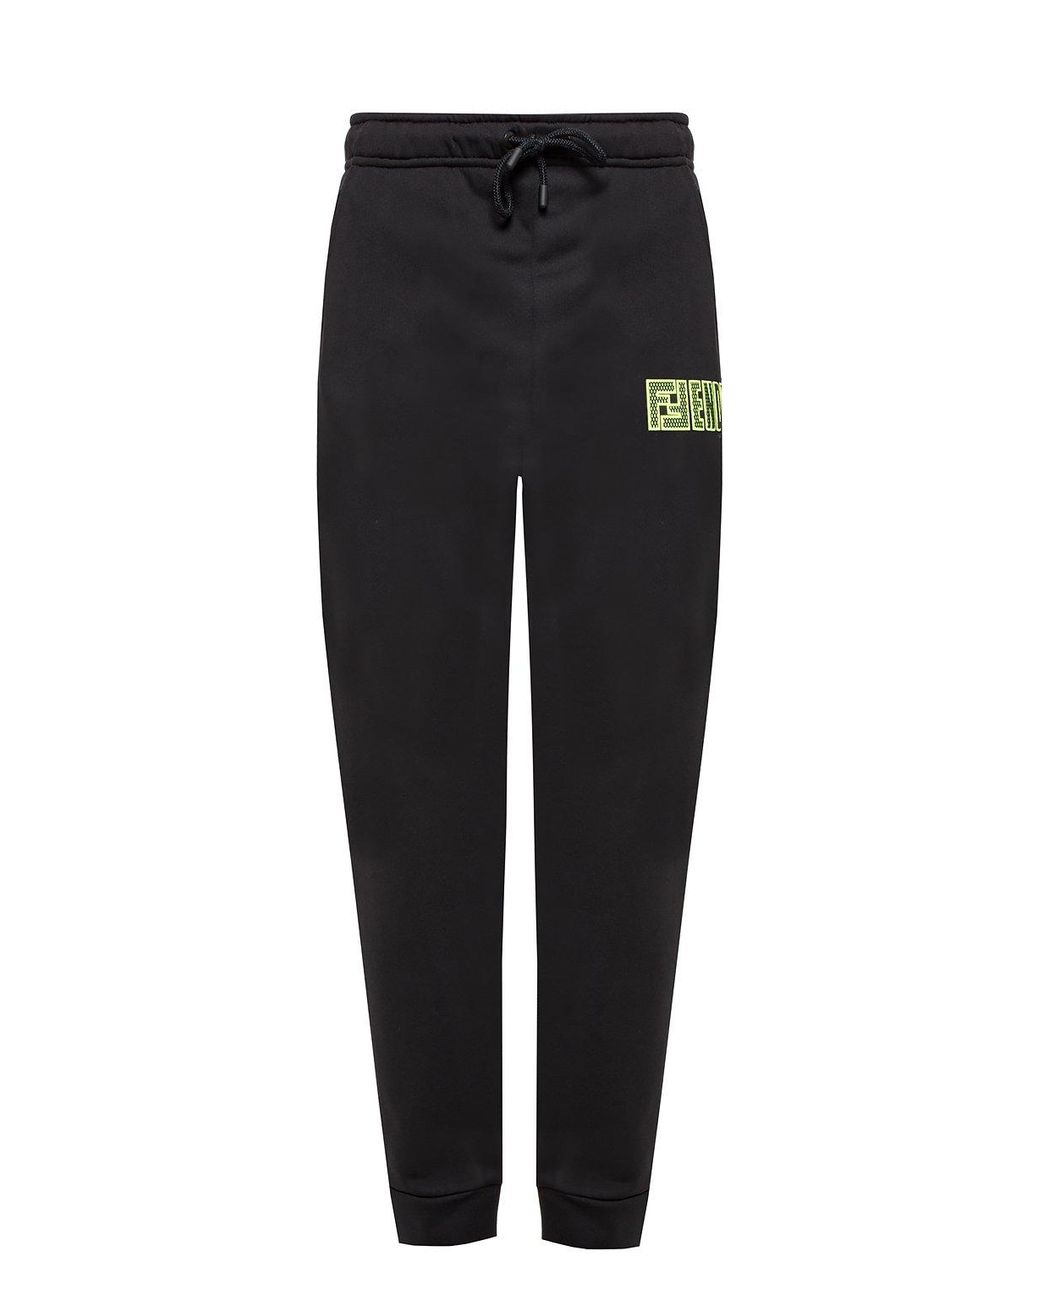 Fendi Branded Sweatpants in Black for Men - Lyst